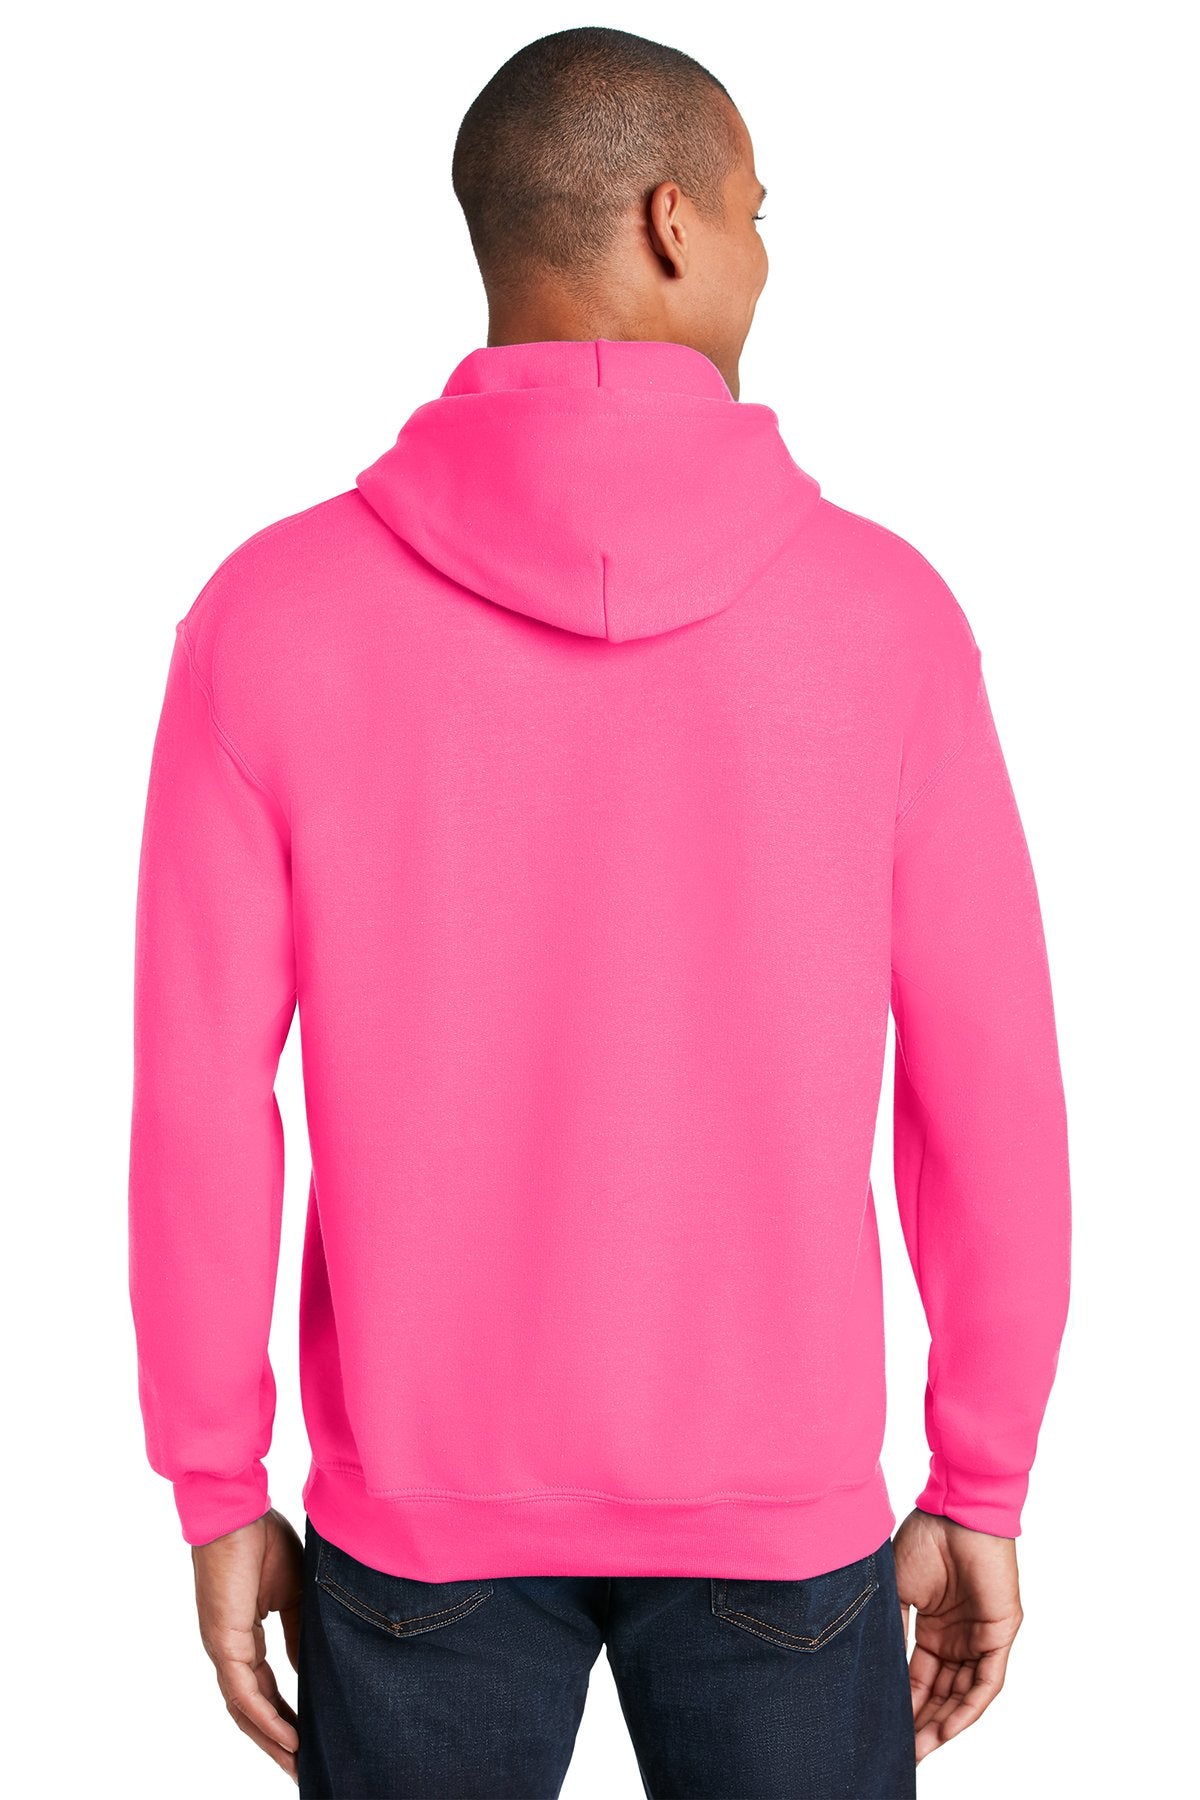 Gildan Heavy Blend Hooded Sweatshirt Safety Pink